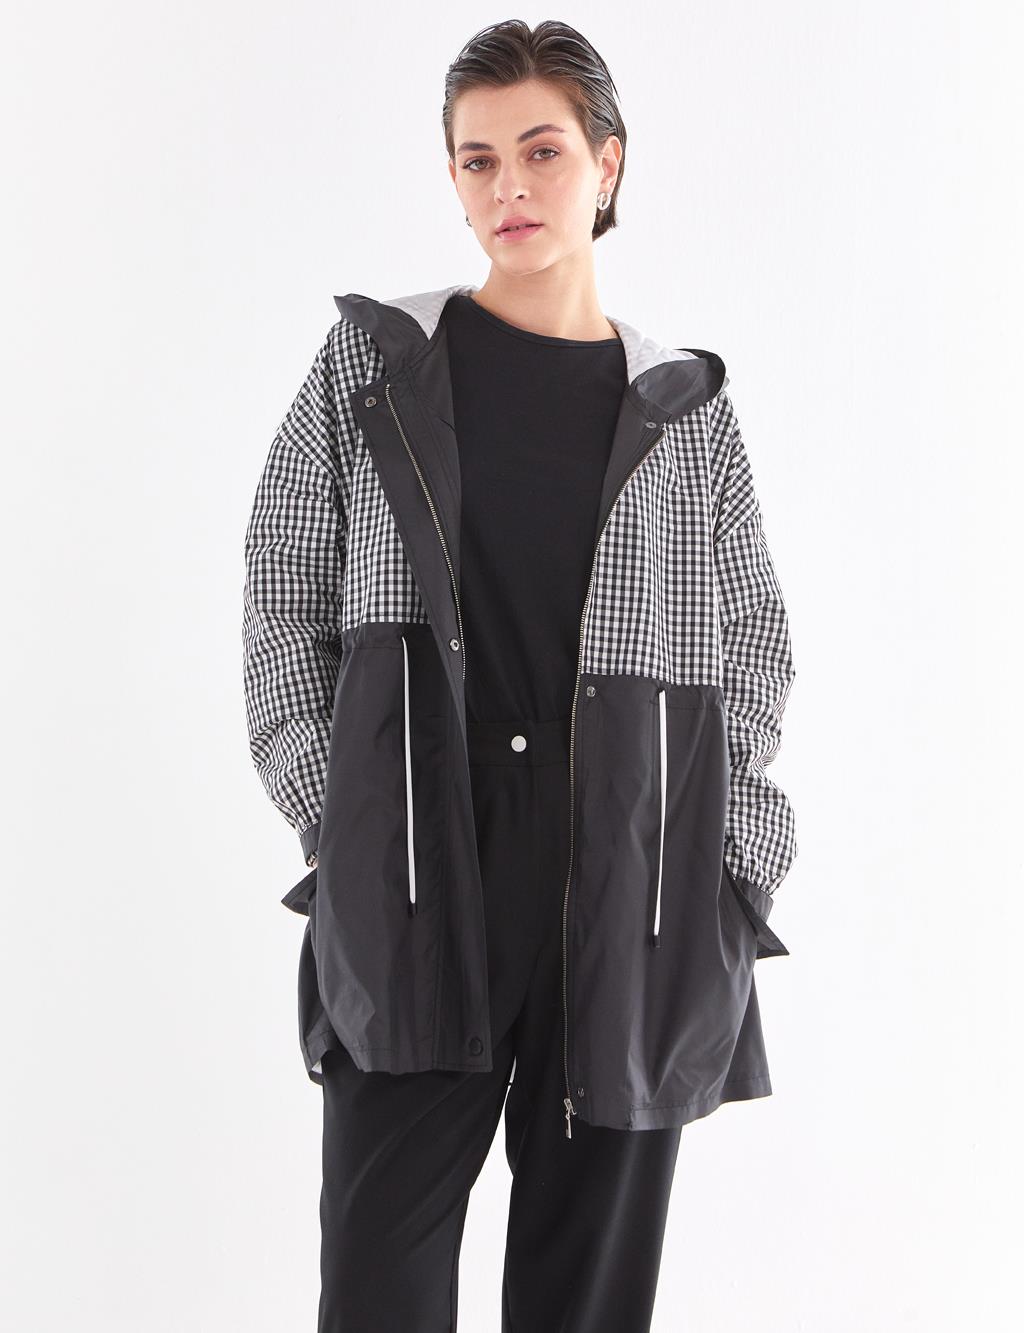 Checkered Sports Jacket Black-White